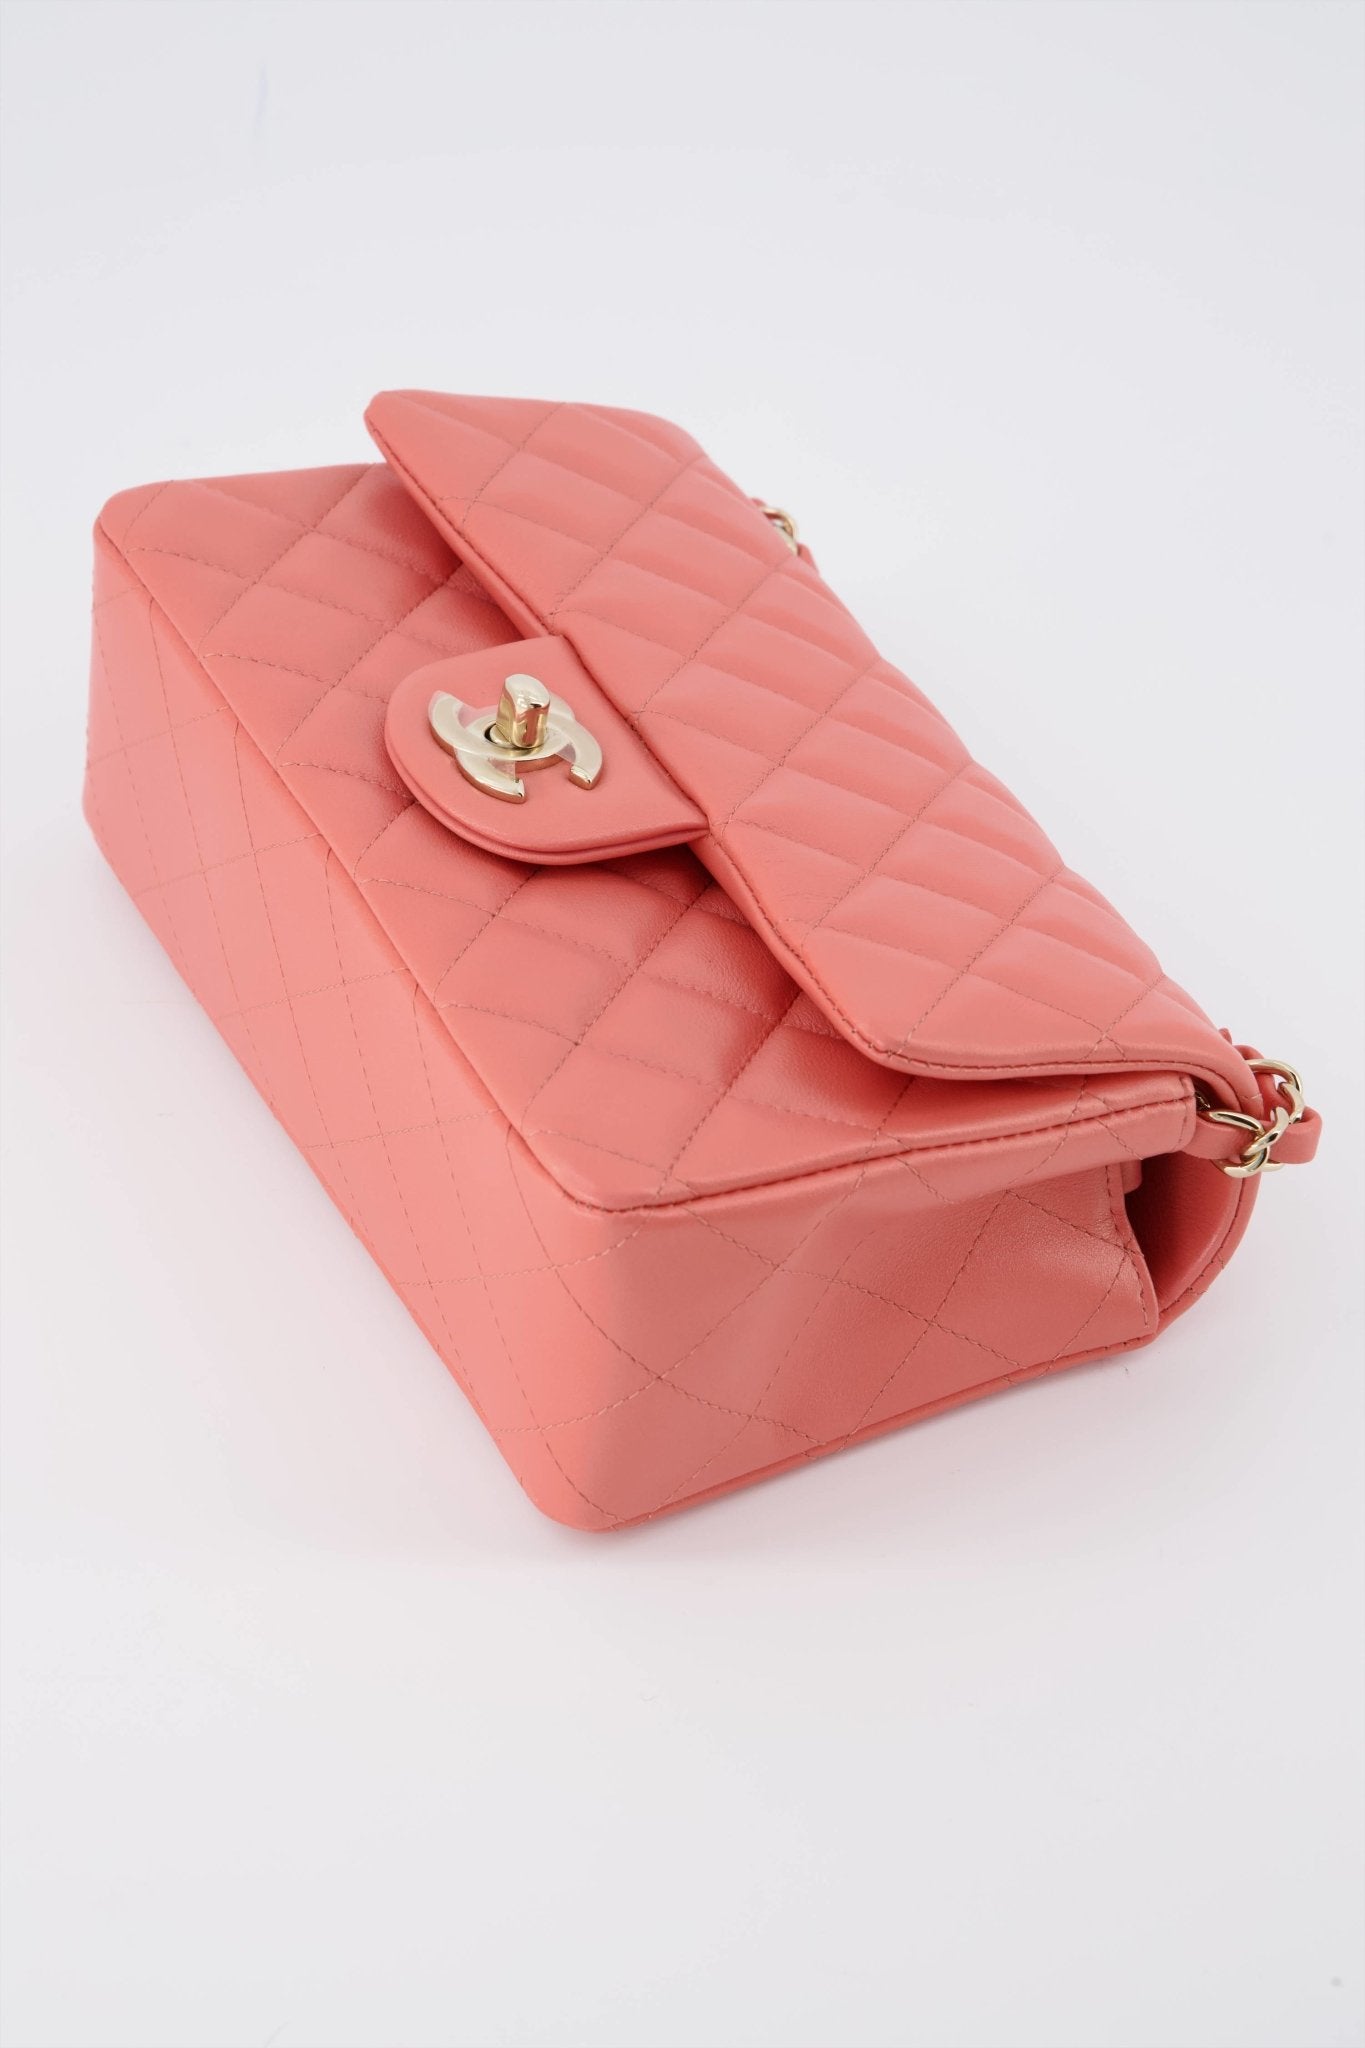 Chanel Mini Rectangular Flap Bag Pink Colour Lambskin with